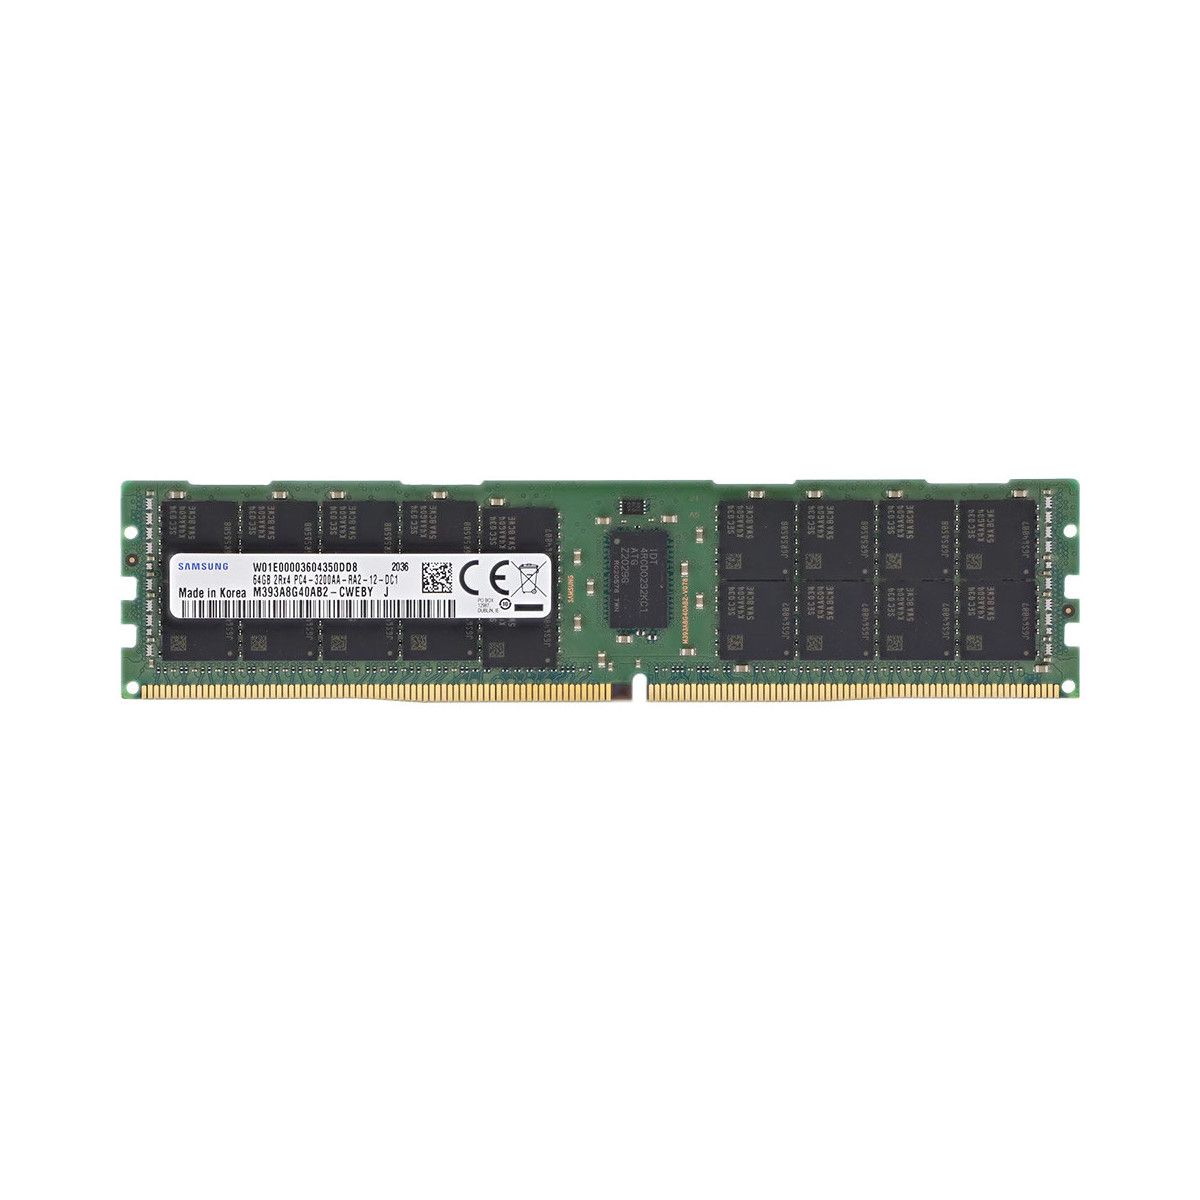 P43170-B21-MS - Memstar 1x 64GB DDR4-3200 RDIMM PC4-25600R - Mem-star OEM compatibile Memoria 1 - Memstar 